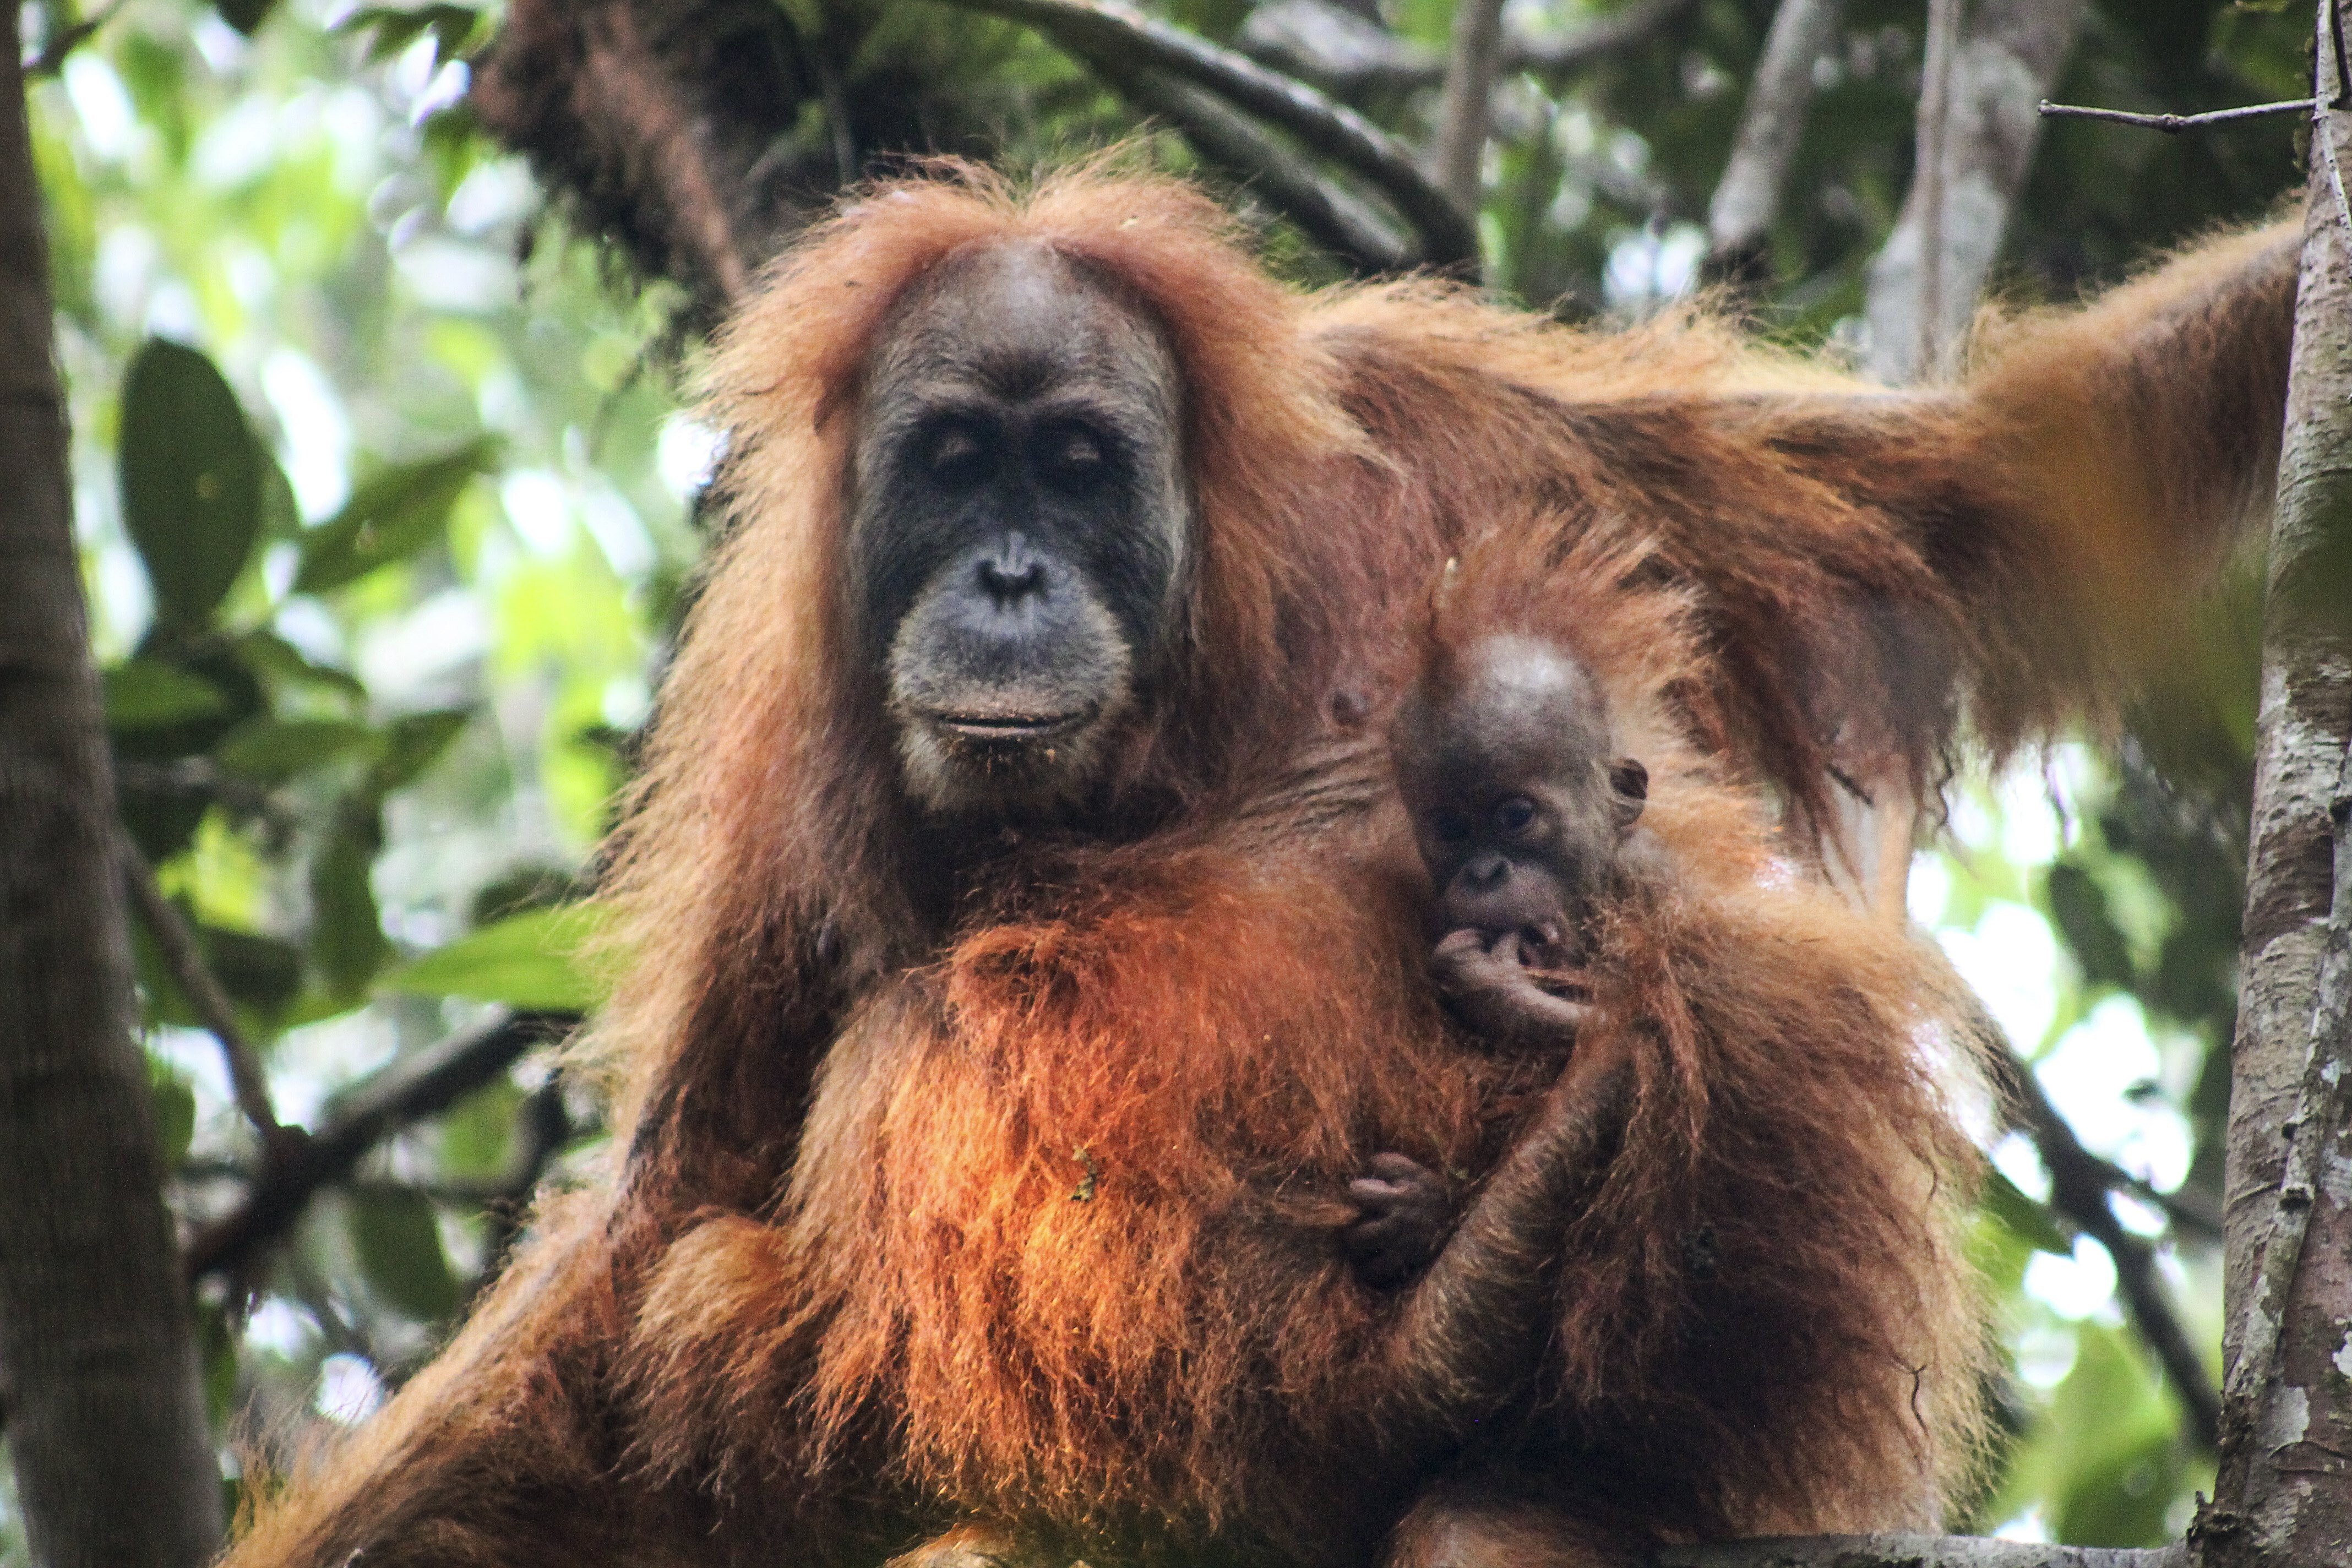 Tapanuli orangutans in Indonesia’s Batang Toru rainforest. Photo: EPA